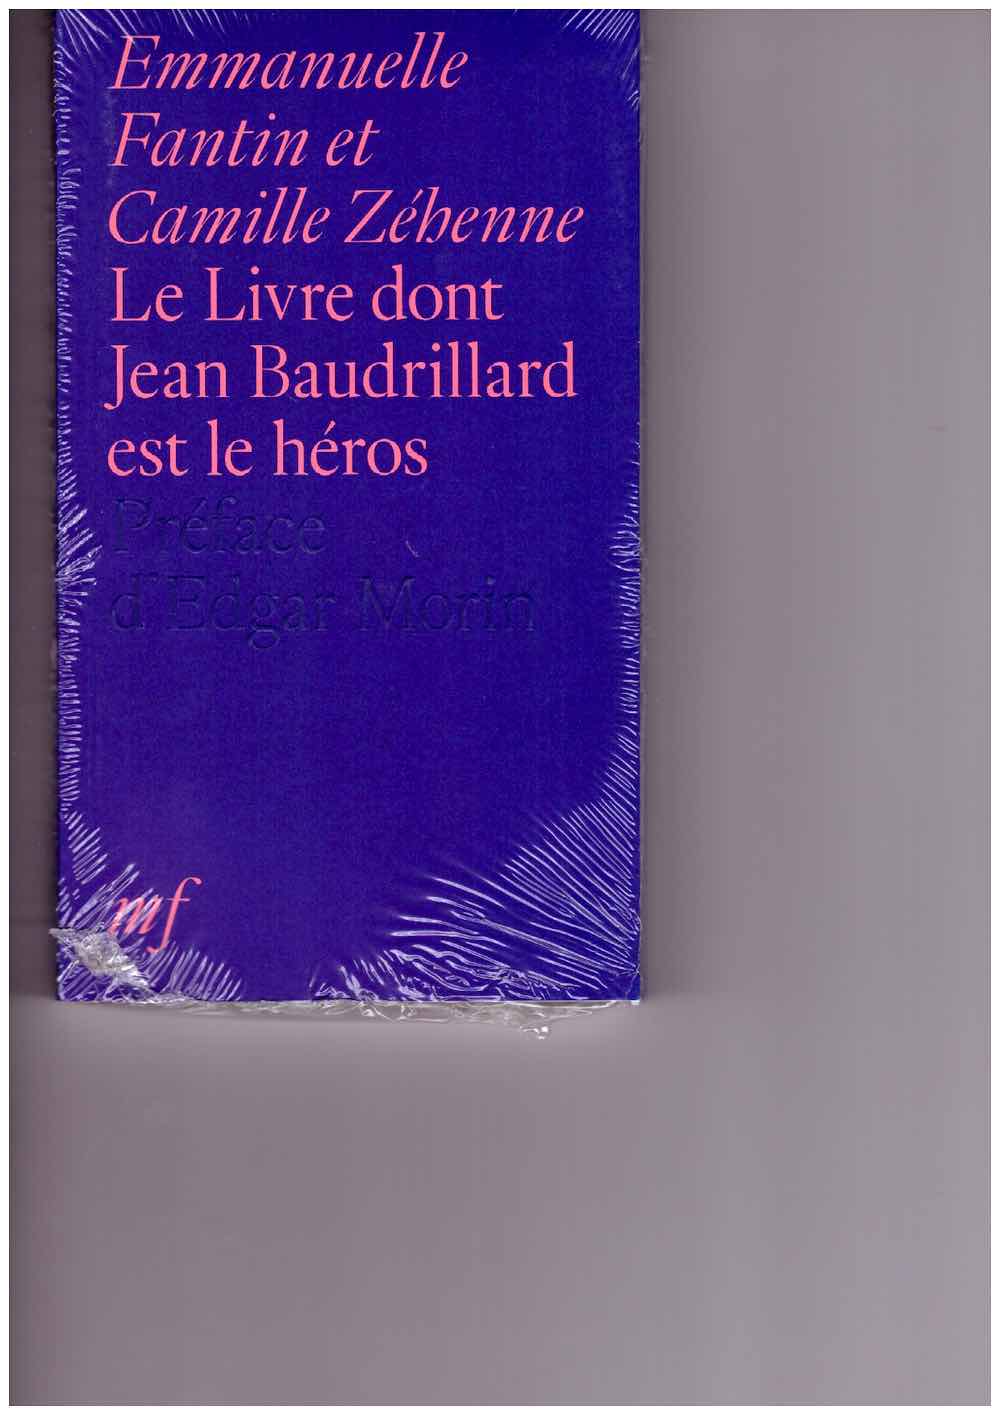 FANTIN, Emmanuelle; ZÉHENNE, Camille - Le Livre dont Jean Baudrillard est le héros